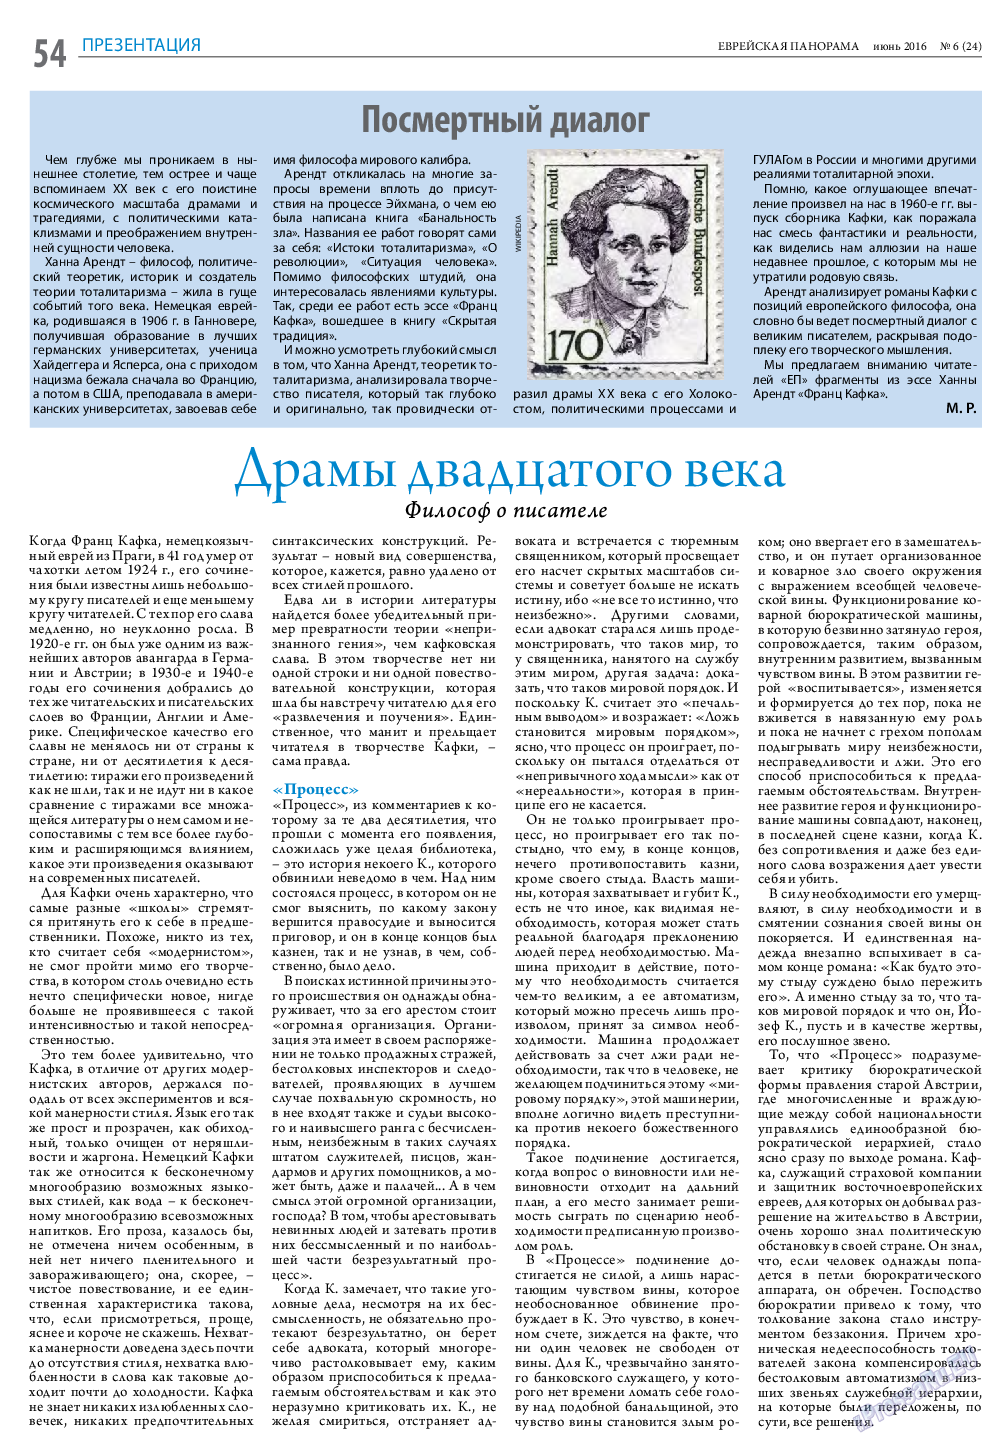 Еврейская панорама, газета. 2016 №6 стр.54